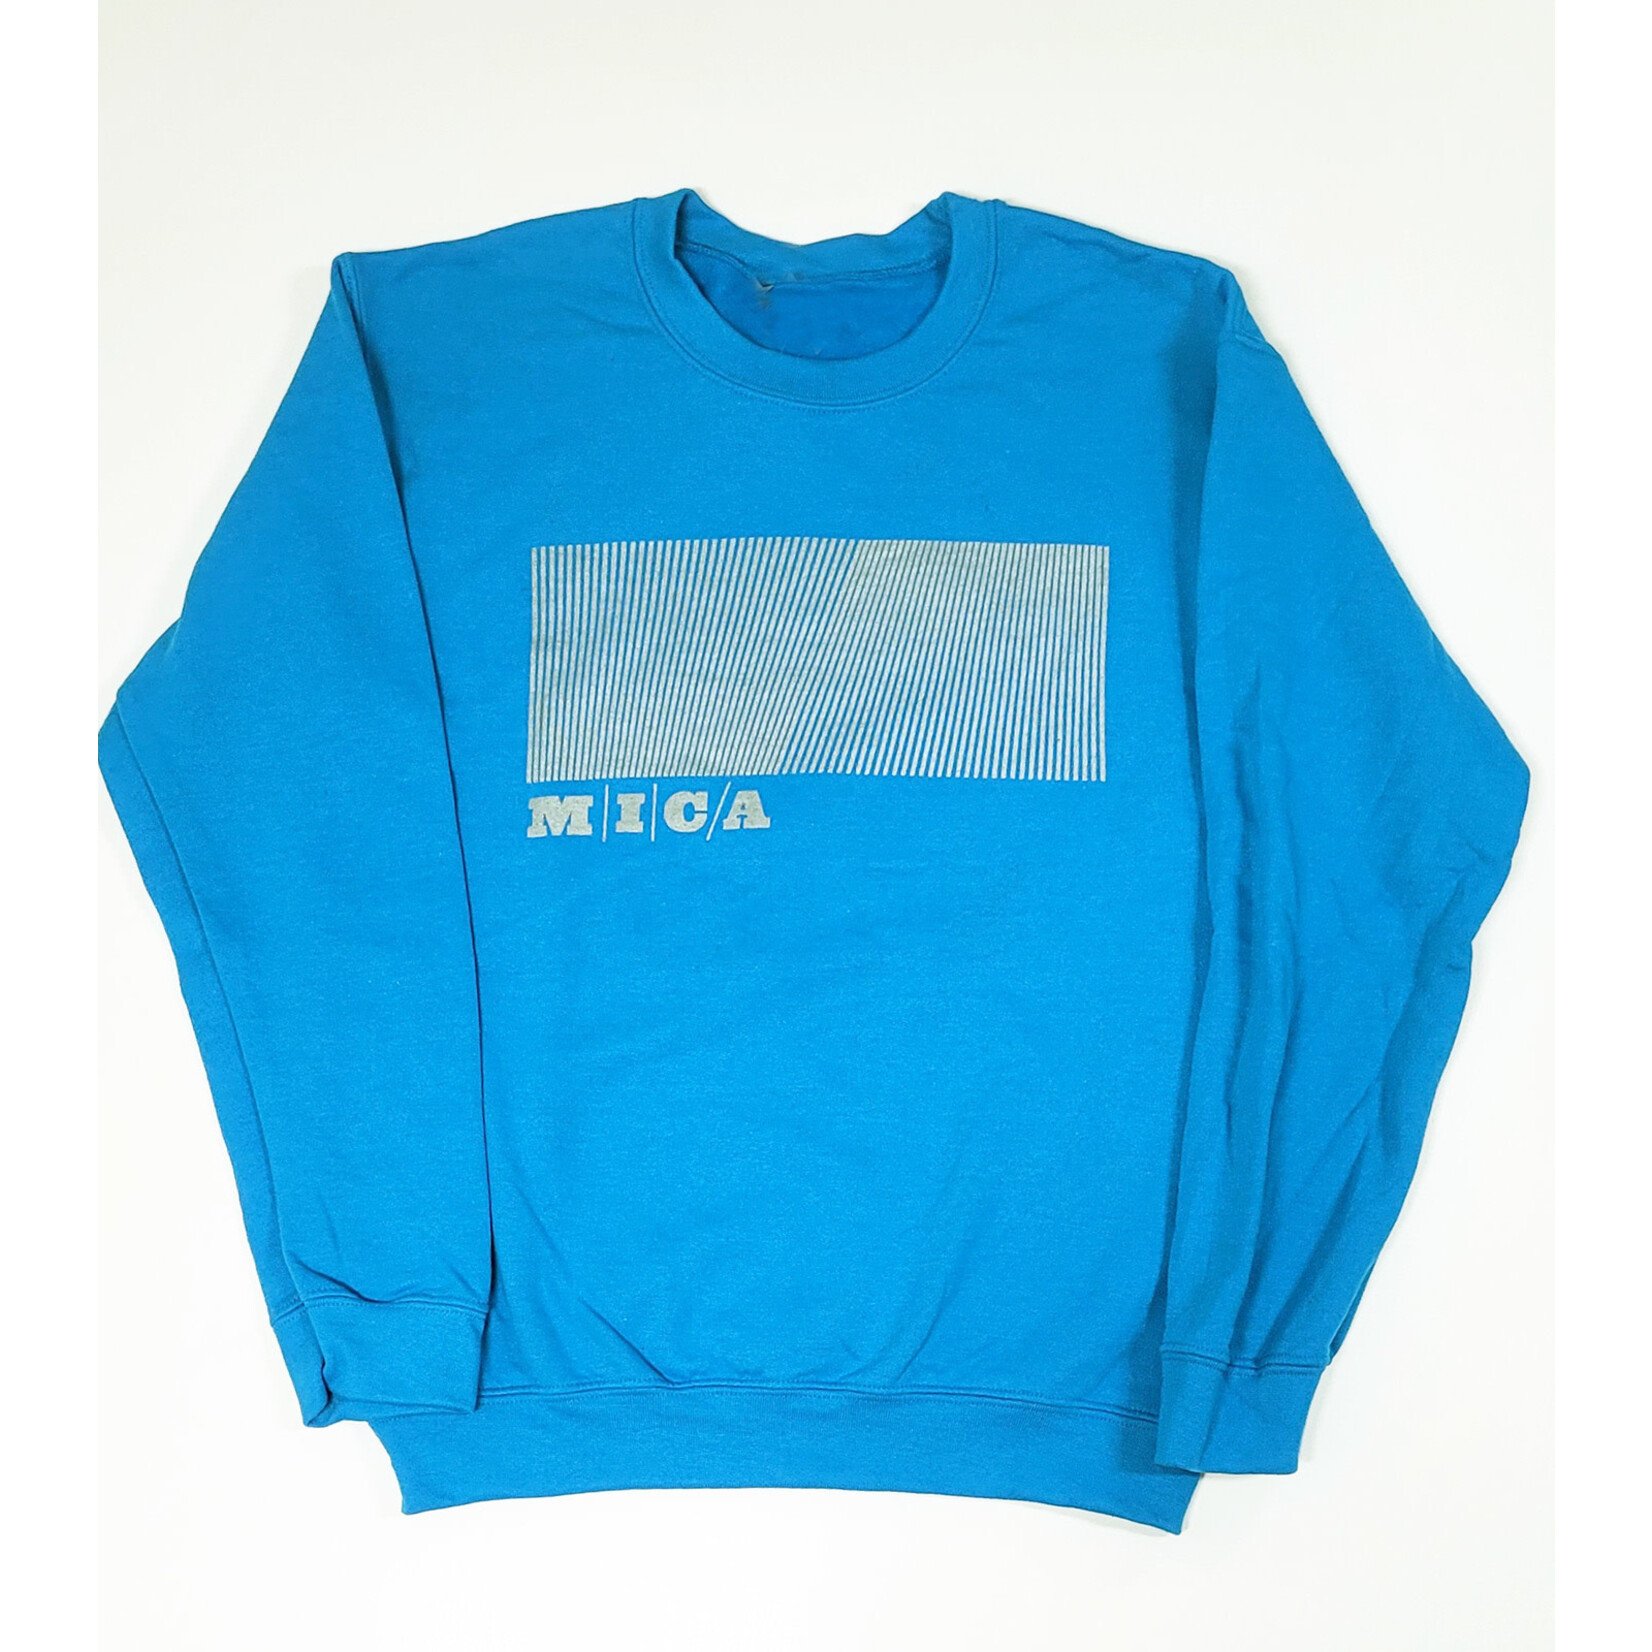 Gildan MICA Crewneck Reflective Logo Sweatshirt